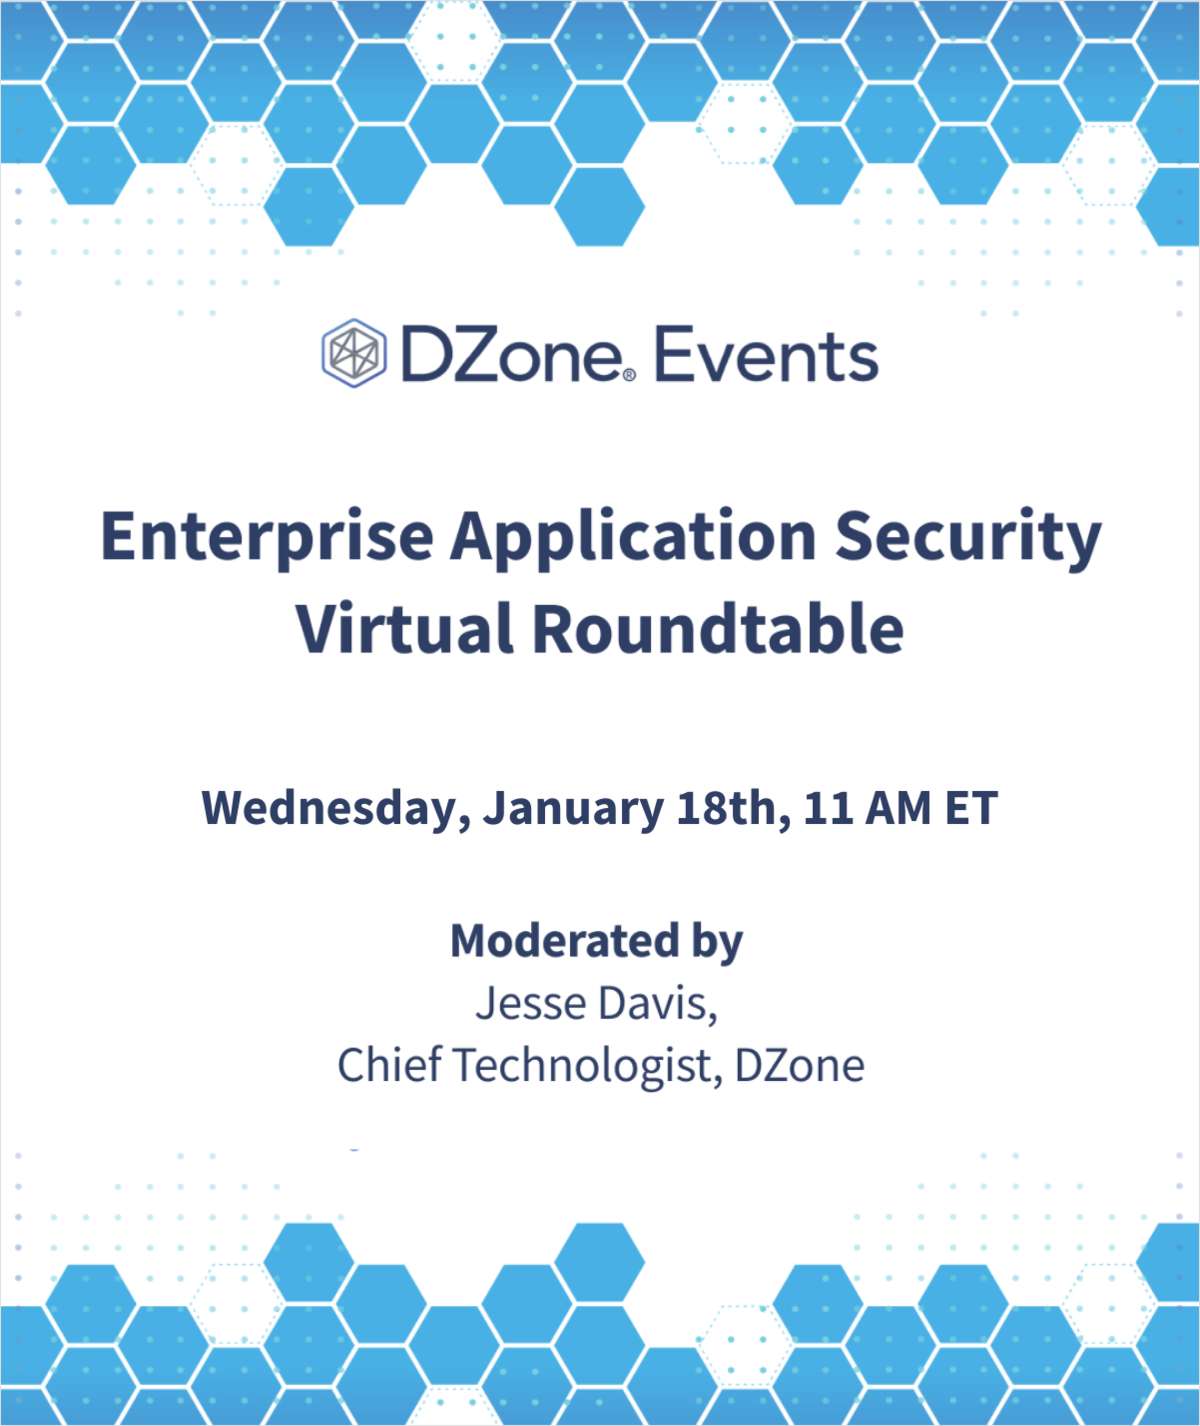 DZone's Enterprise Application Security Virtual Roundtable